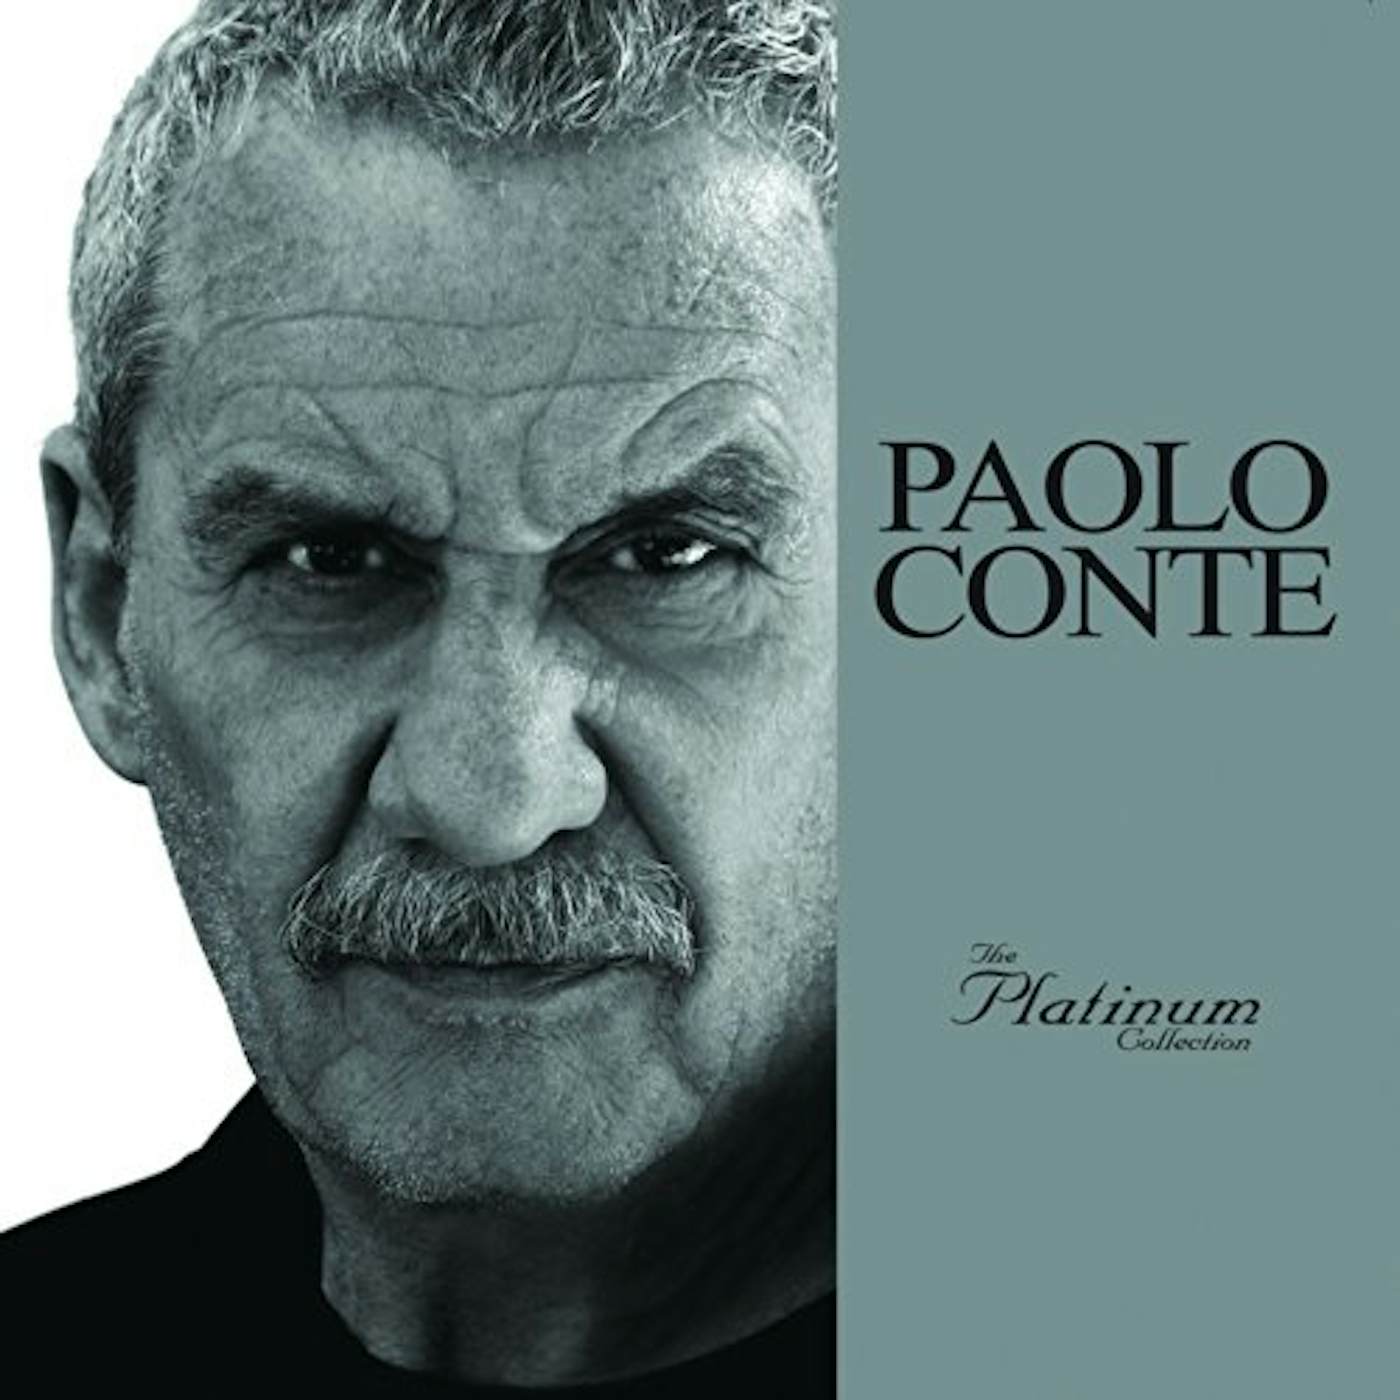 Paolo Conte PLATINUM COLLECTION CD